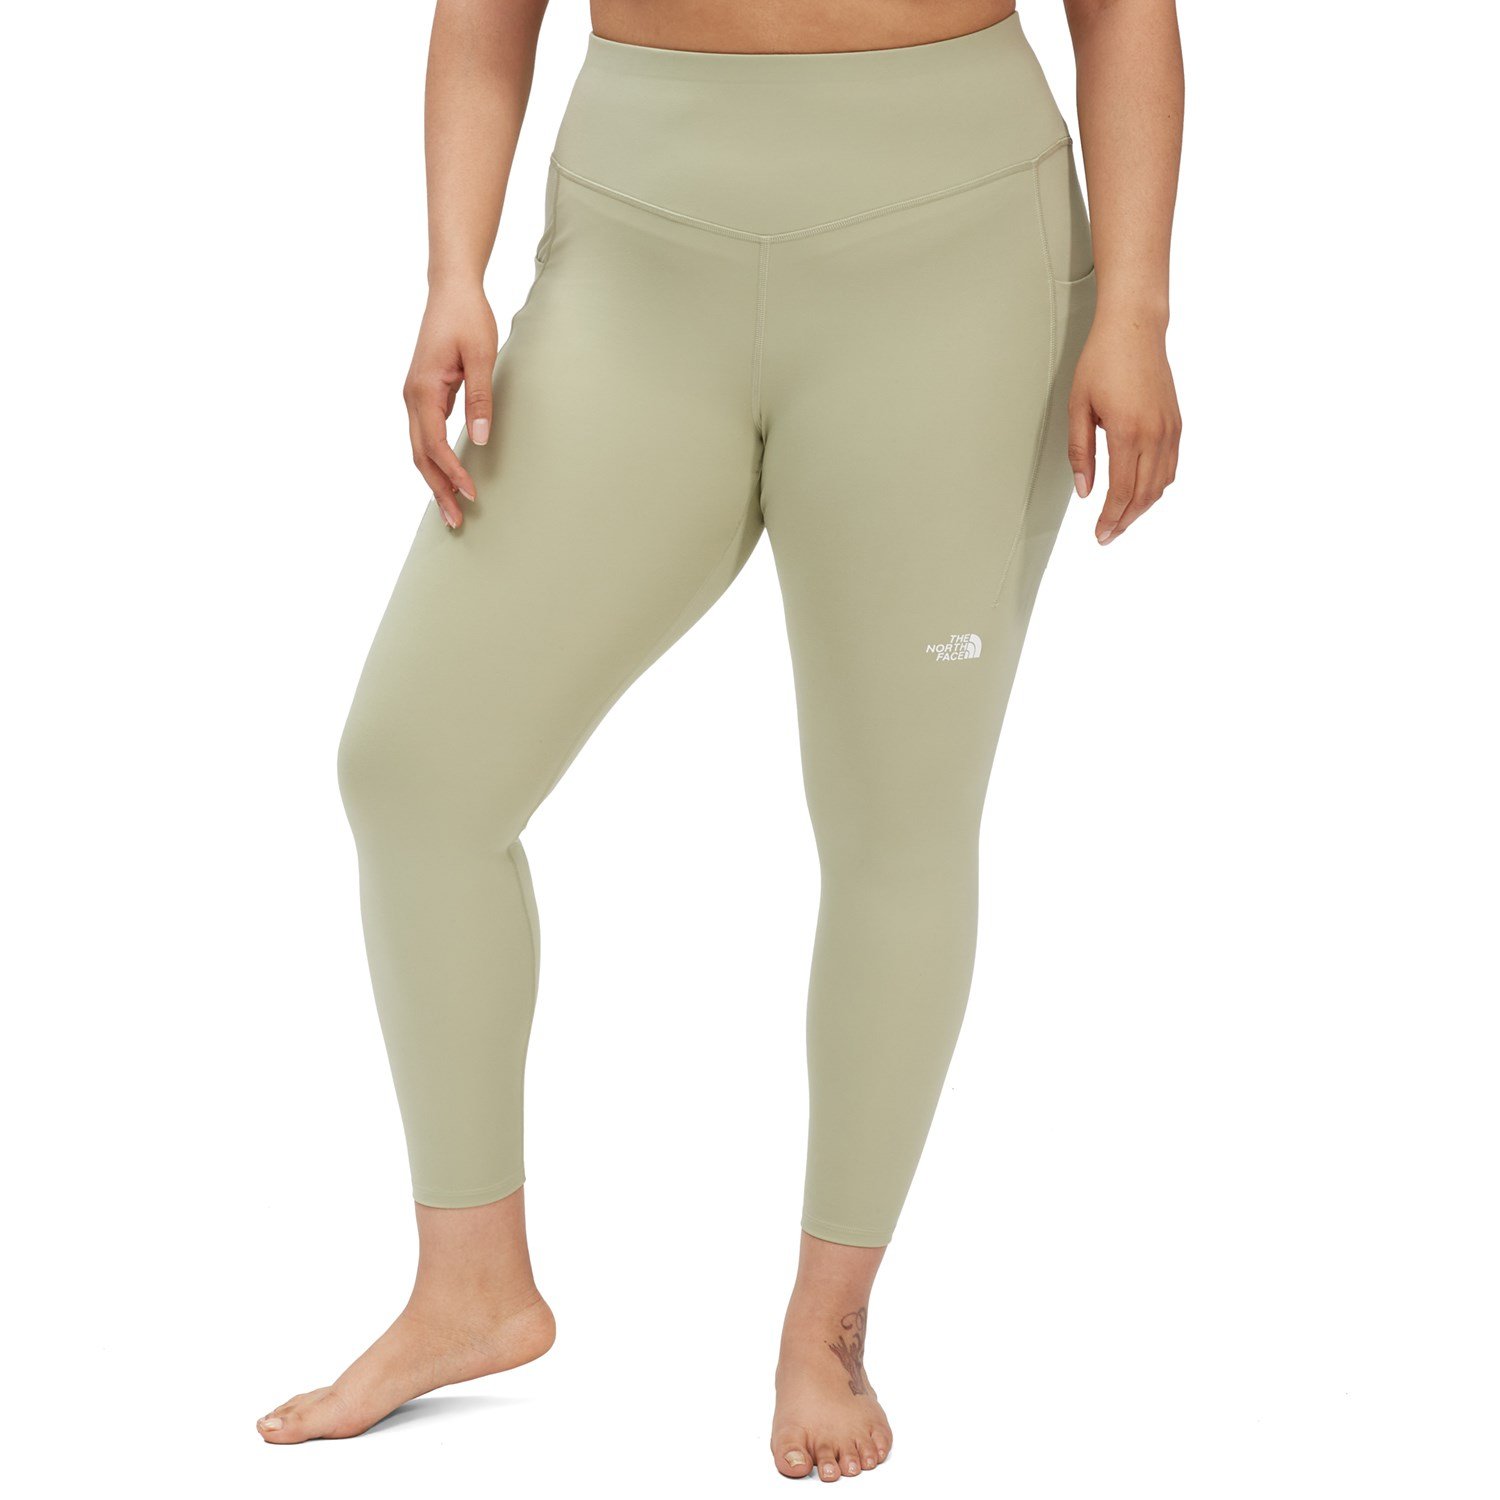 https://images.evo.com/imgp/zoom/213604/927677/the-north-face-midline-high-rise-pocket-plus-size-leggings-women-s-1x.jpg